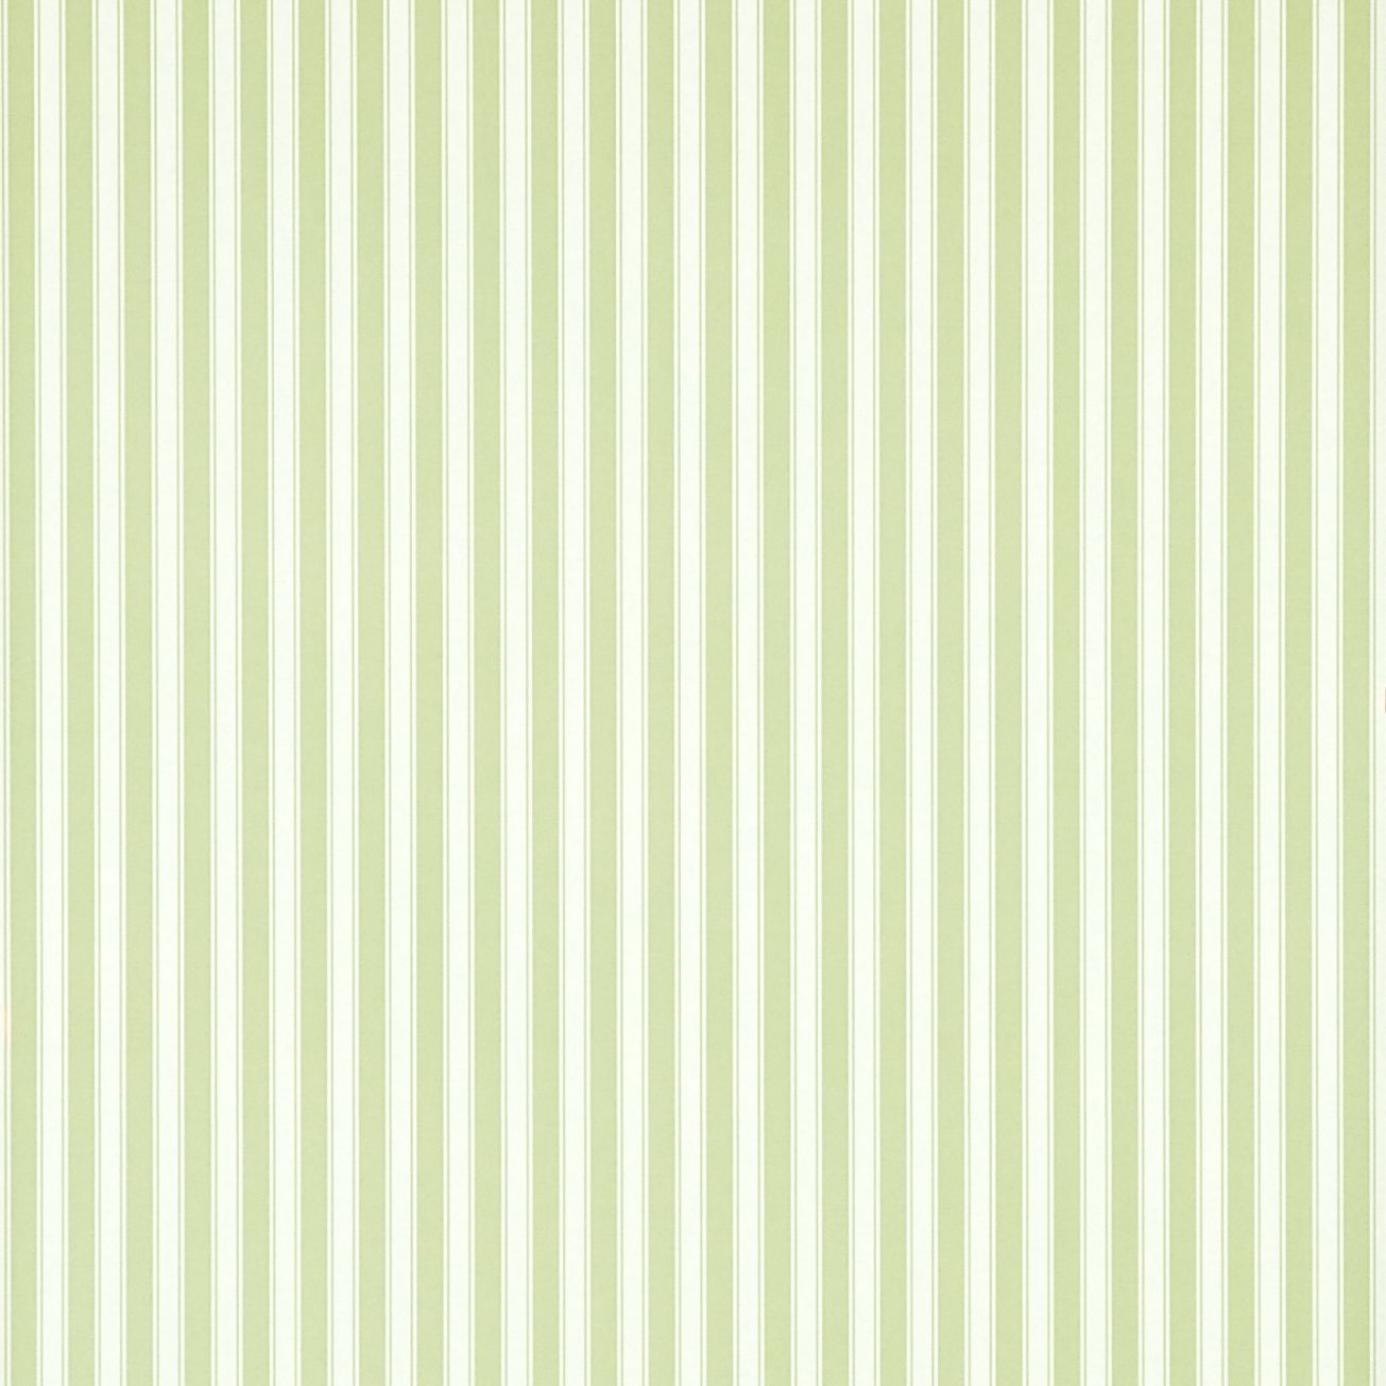 The green stripe